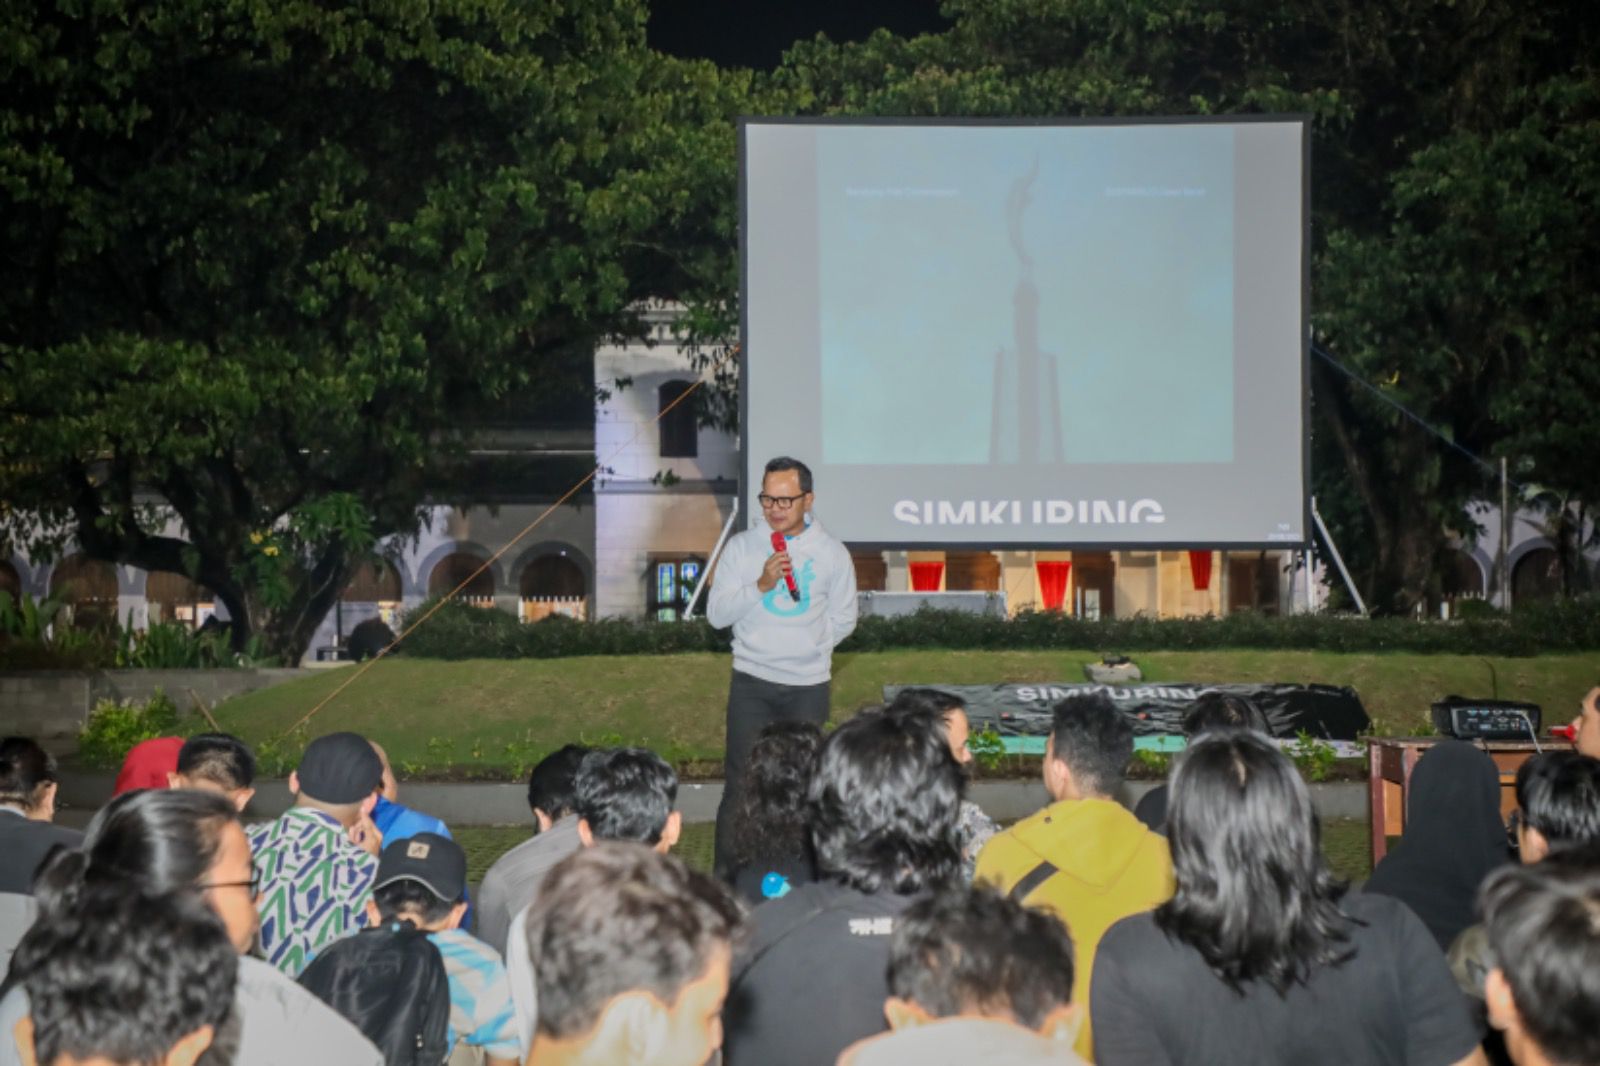 Sinema Kuriling Ditayangkan di Alun-alun Kota Bogor, Ini Respon Bima Arya!